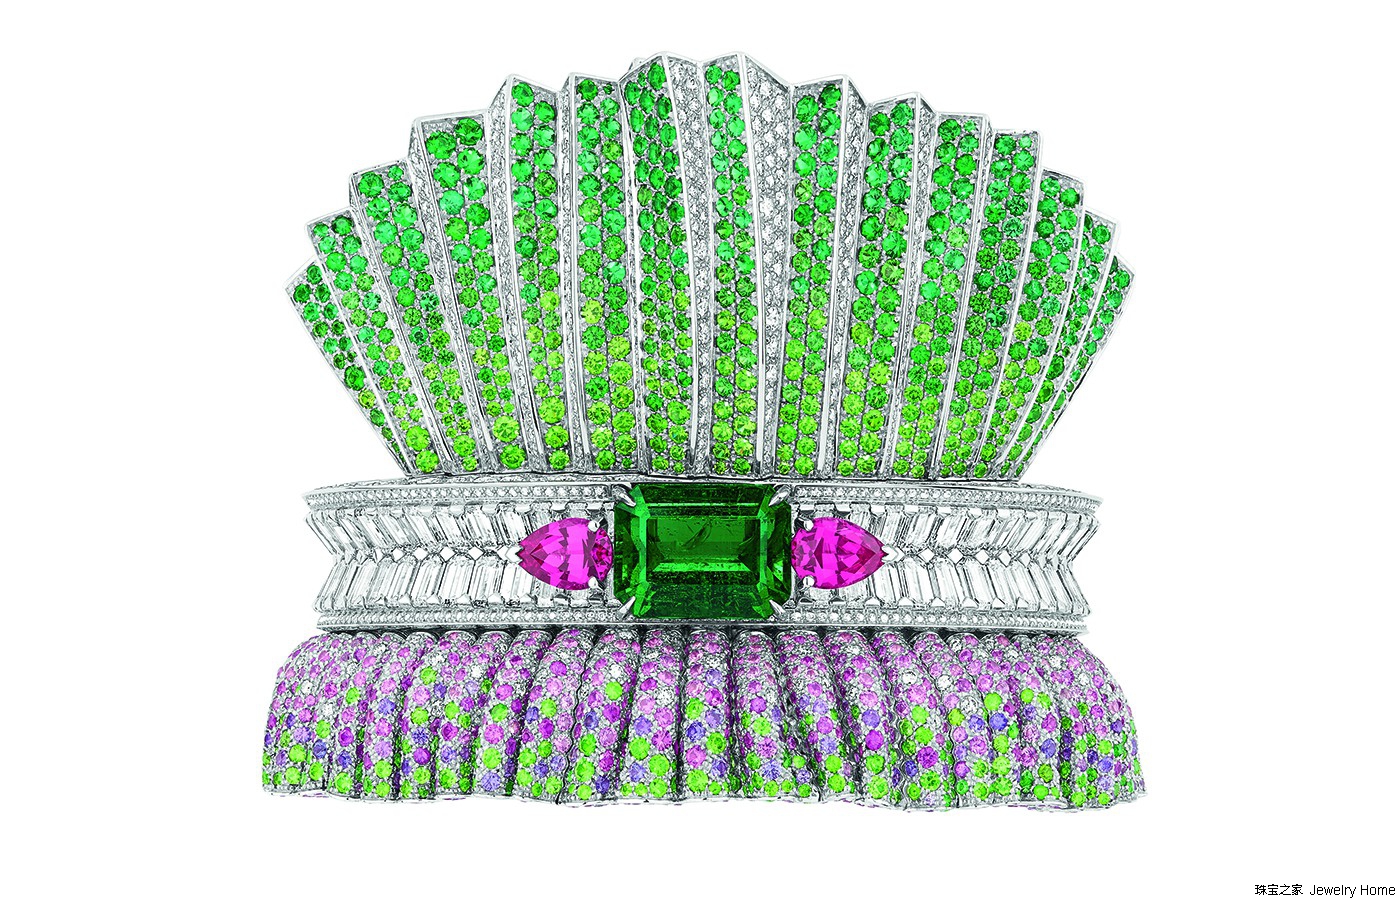 历乾嘉|Archi Dior系列Bar en Corolle高级珠宝镯子 来源于Corolle高端时装的建筑艺术